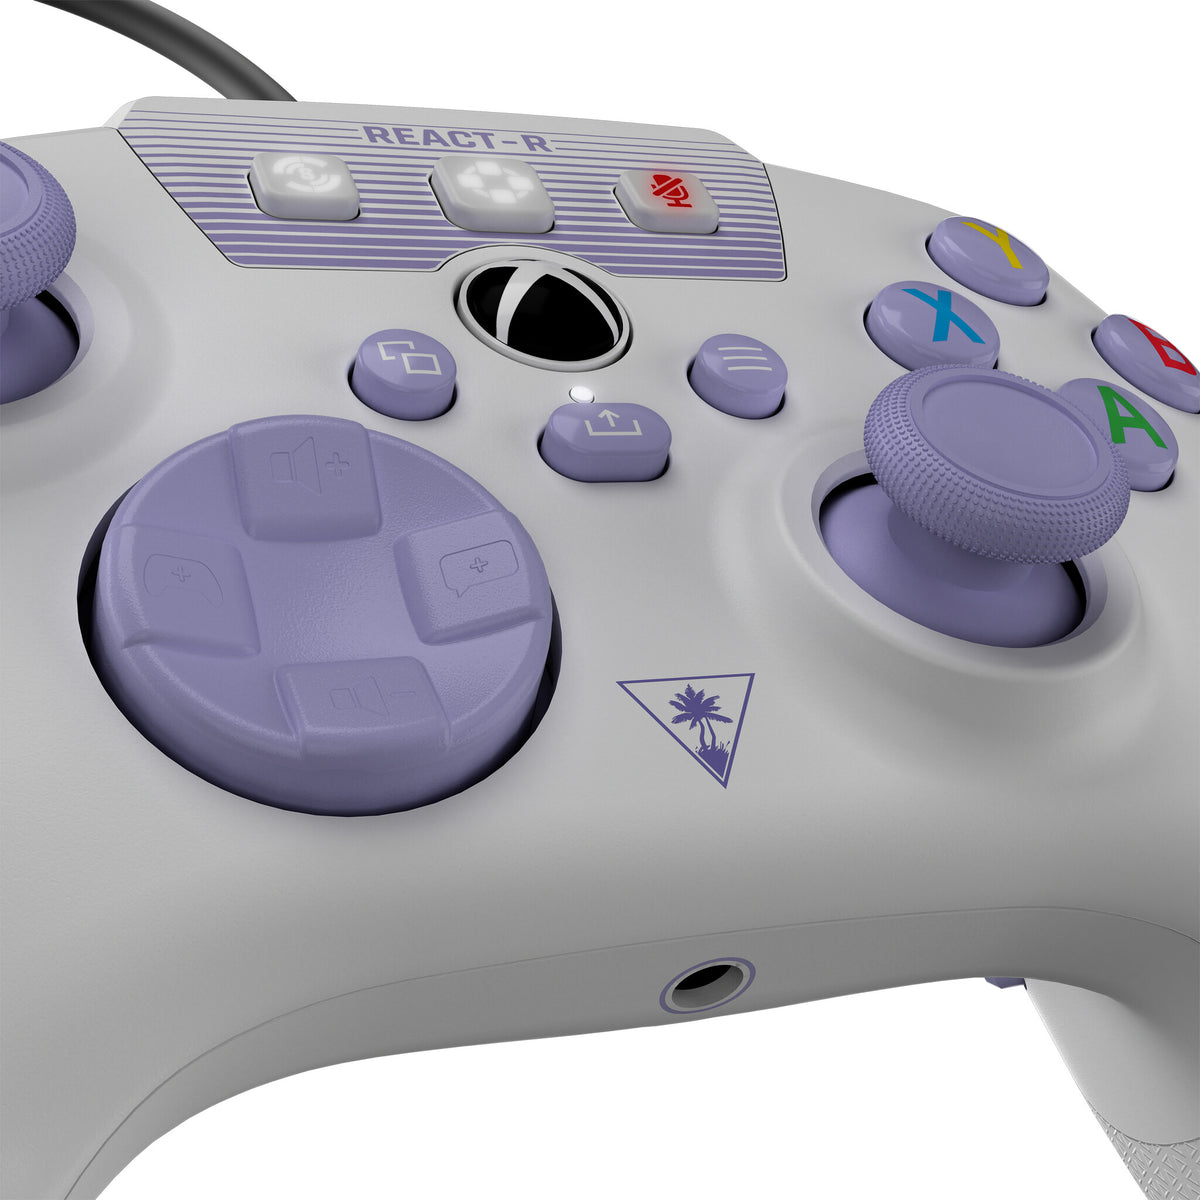 Turtle Beach REACT-R - USB Gamepad for PC / Xbox Series X|S in Purple / White